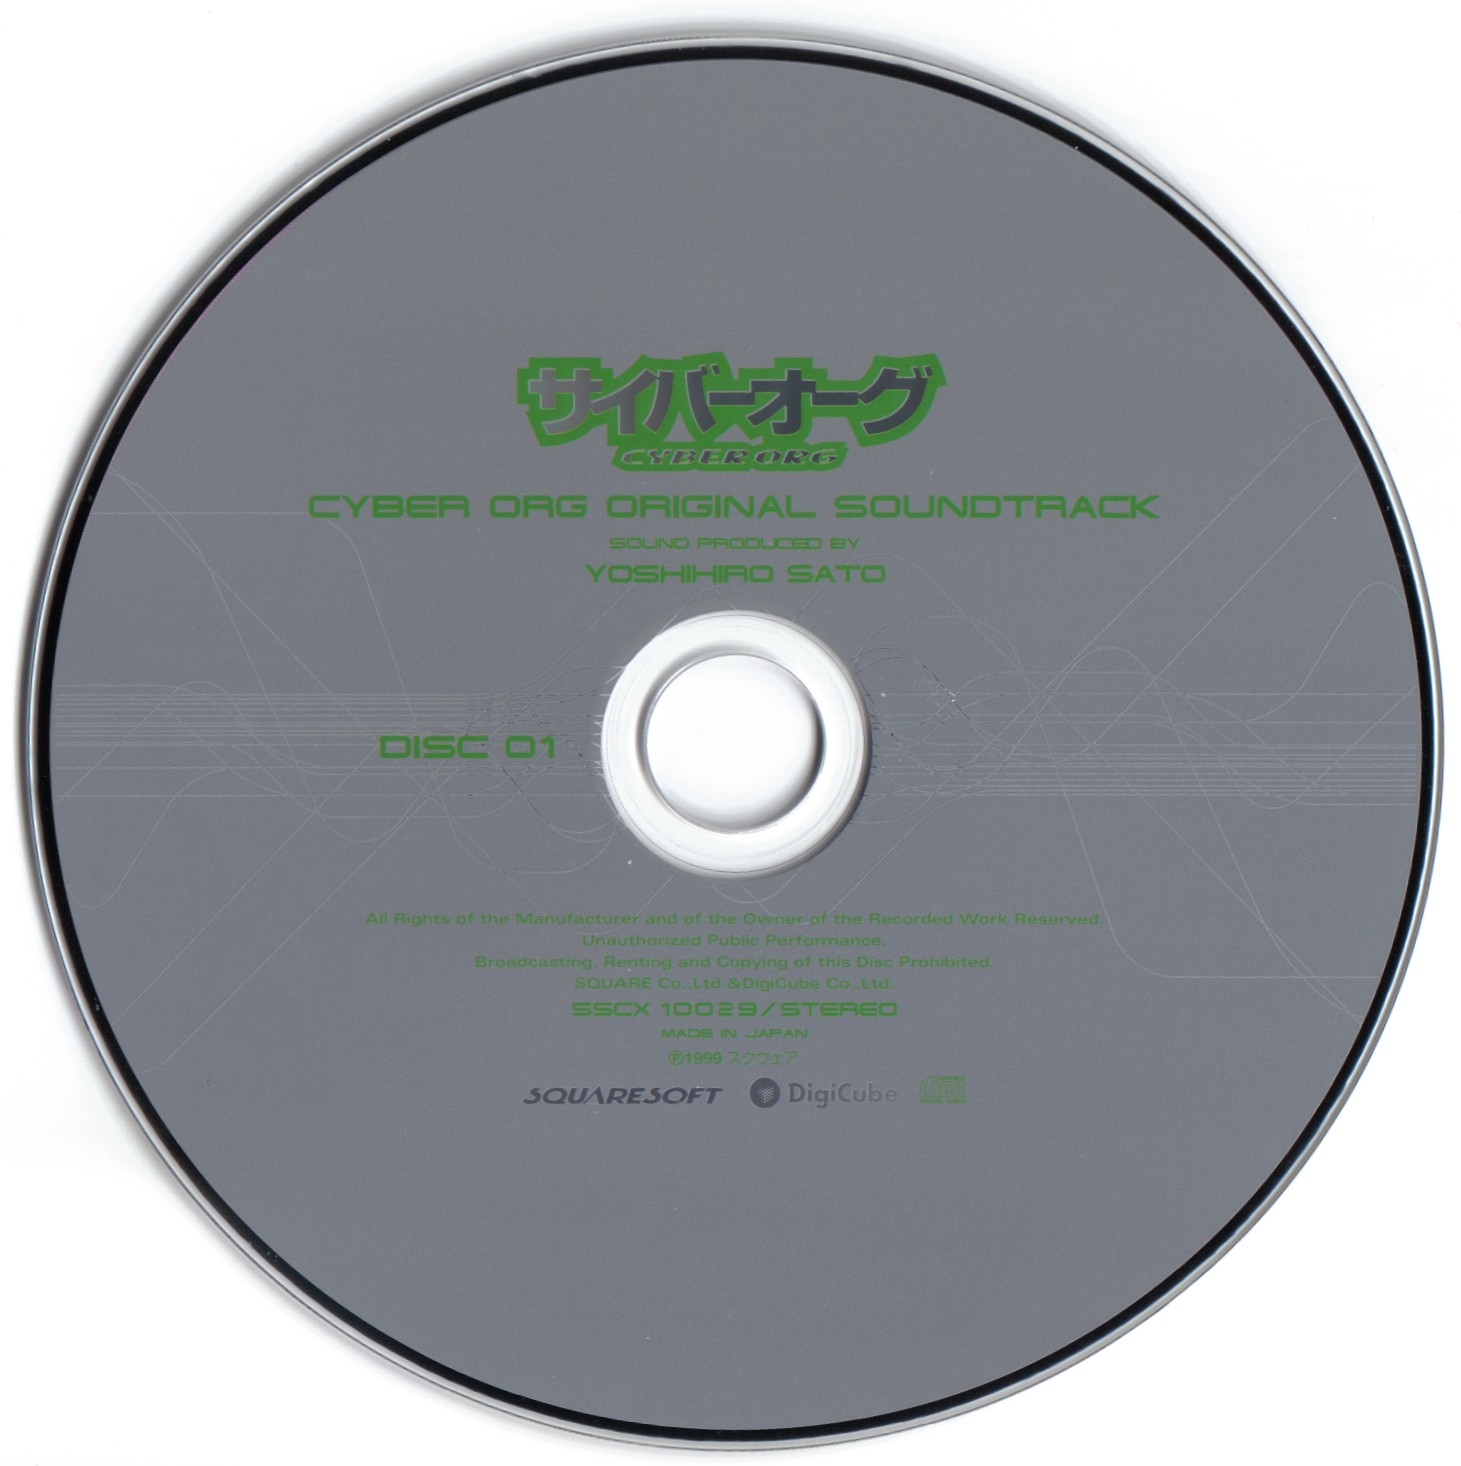 CYBER ORG ORIGINAL SOUNDTRACK (1999) MP3 - Download CYBER ORG ORIGINAL  SOUNDTRACK (1999) Soundtracks for FREE!